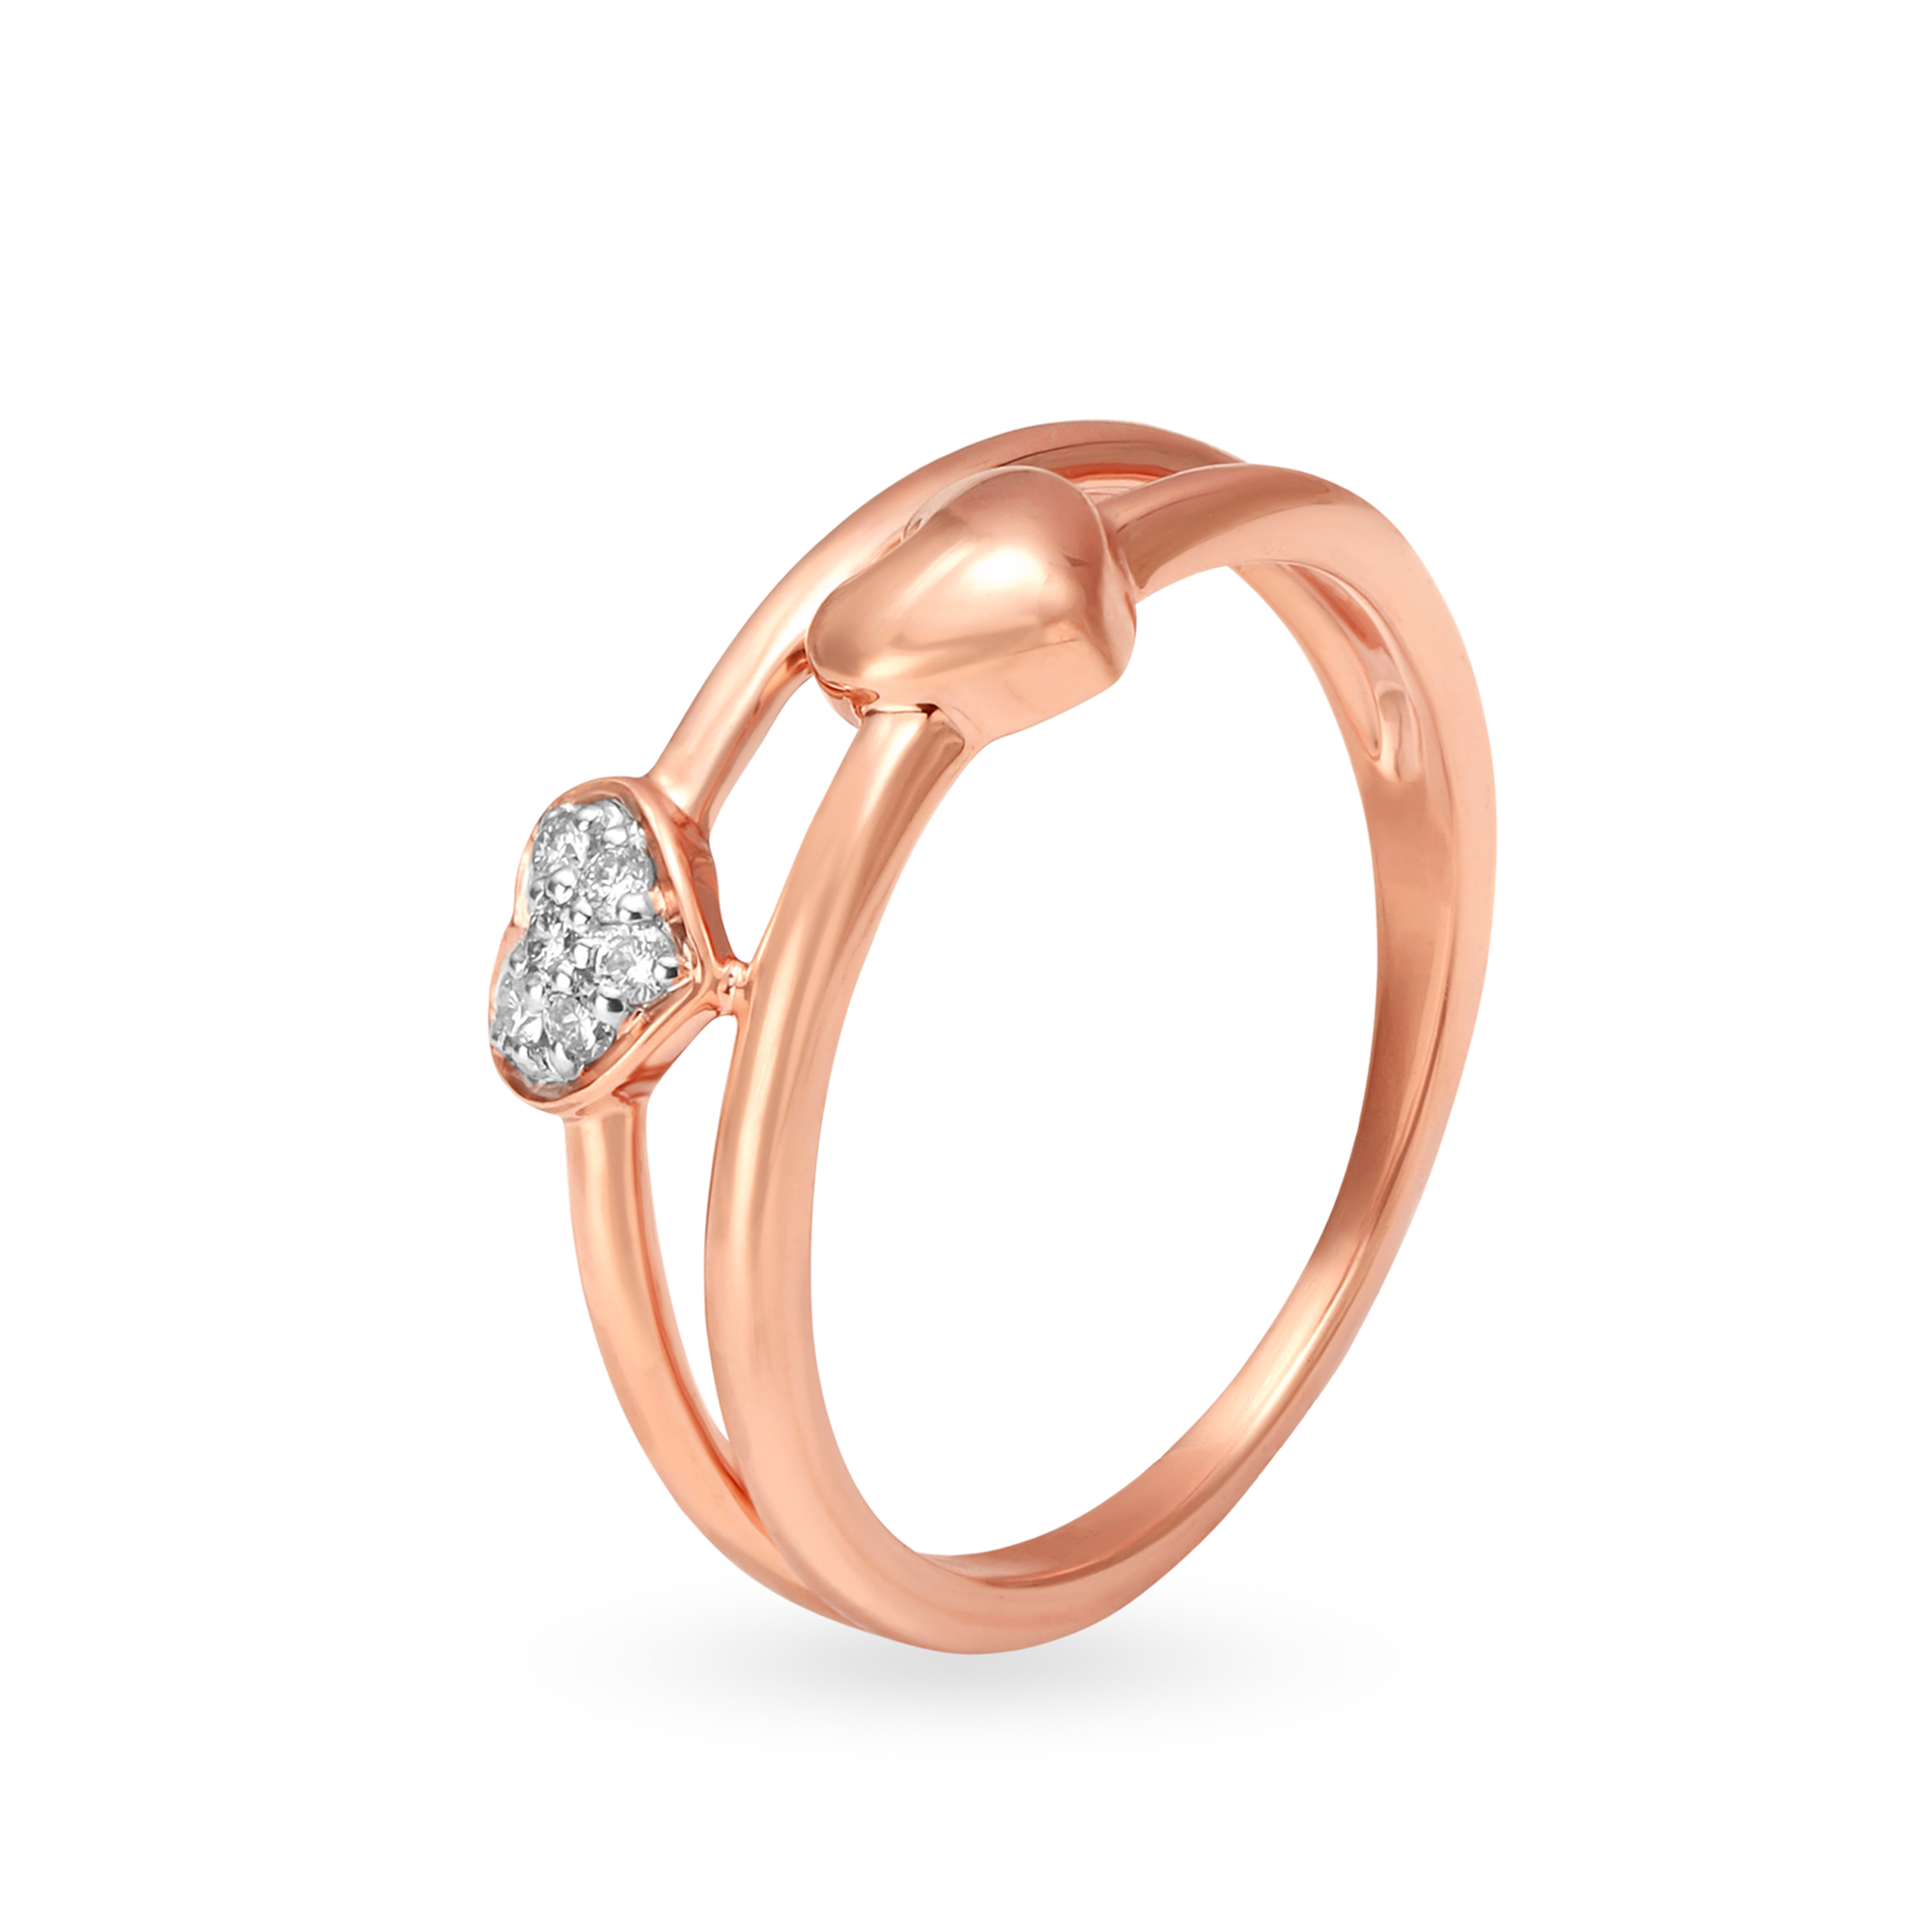 Valk Thorn Ring with White Diamonds – Kris Averi